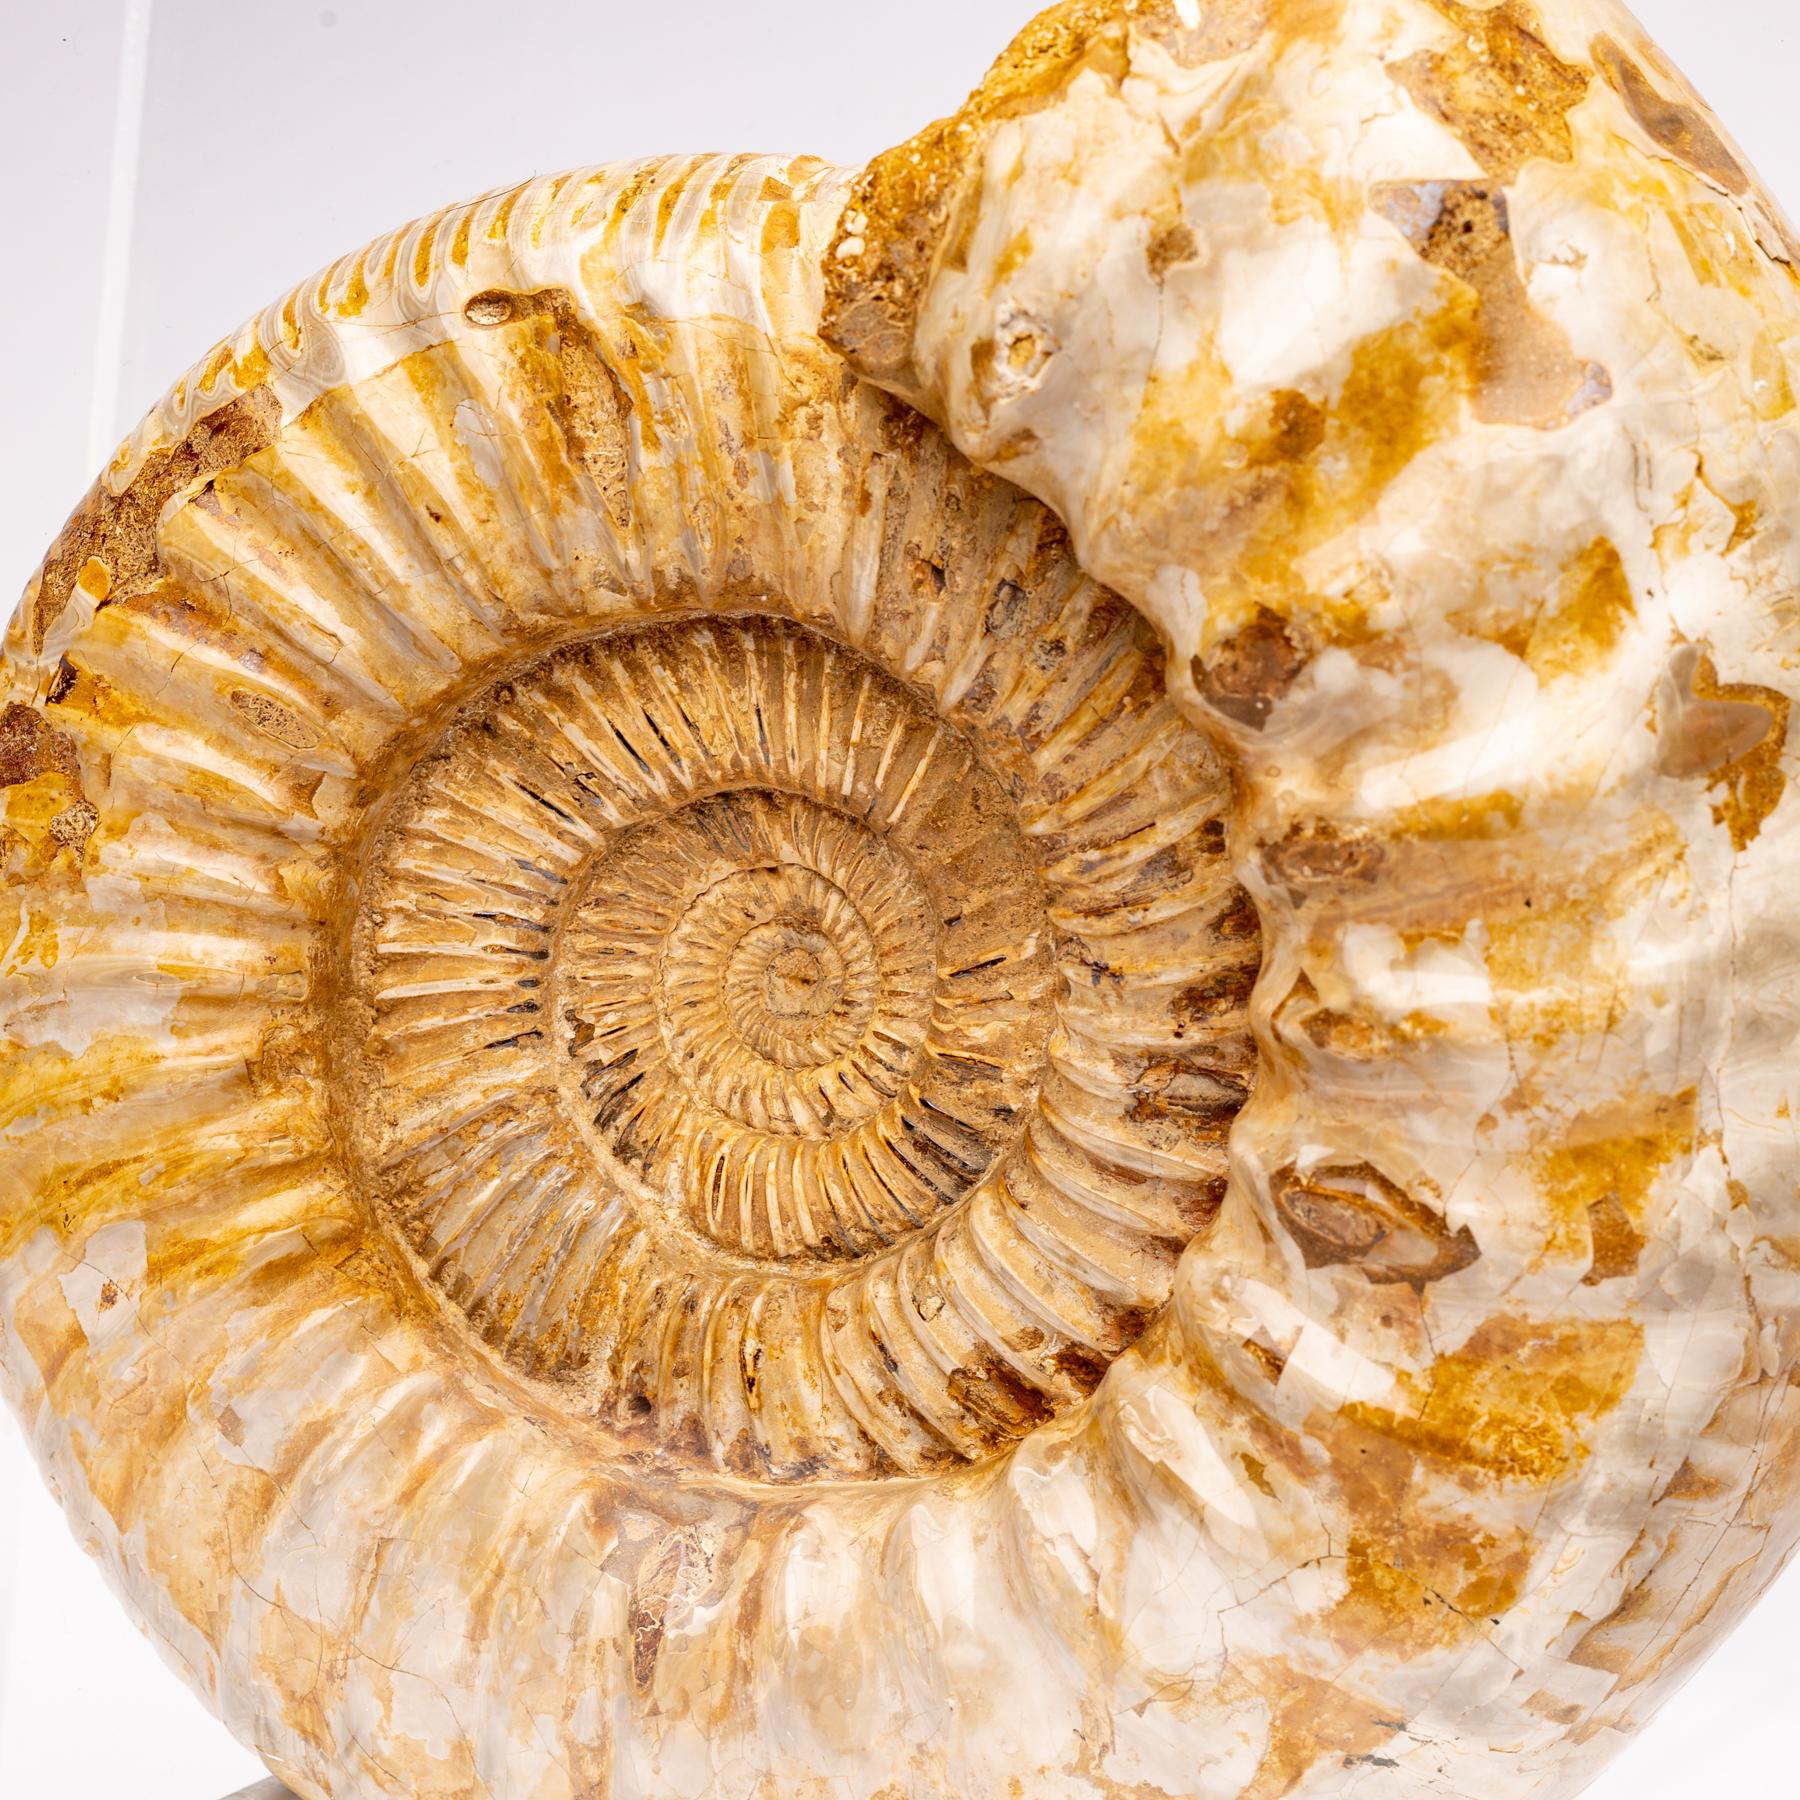 Madagascar Perisphinctes Fossil Ammonite on Acrylic Stand, Jurassic Period 4